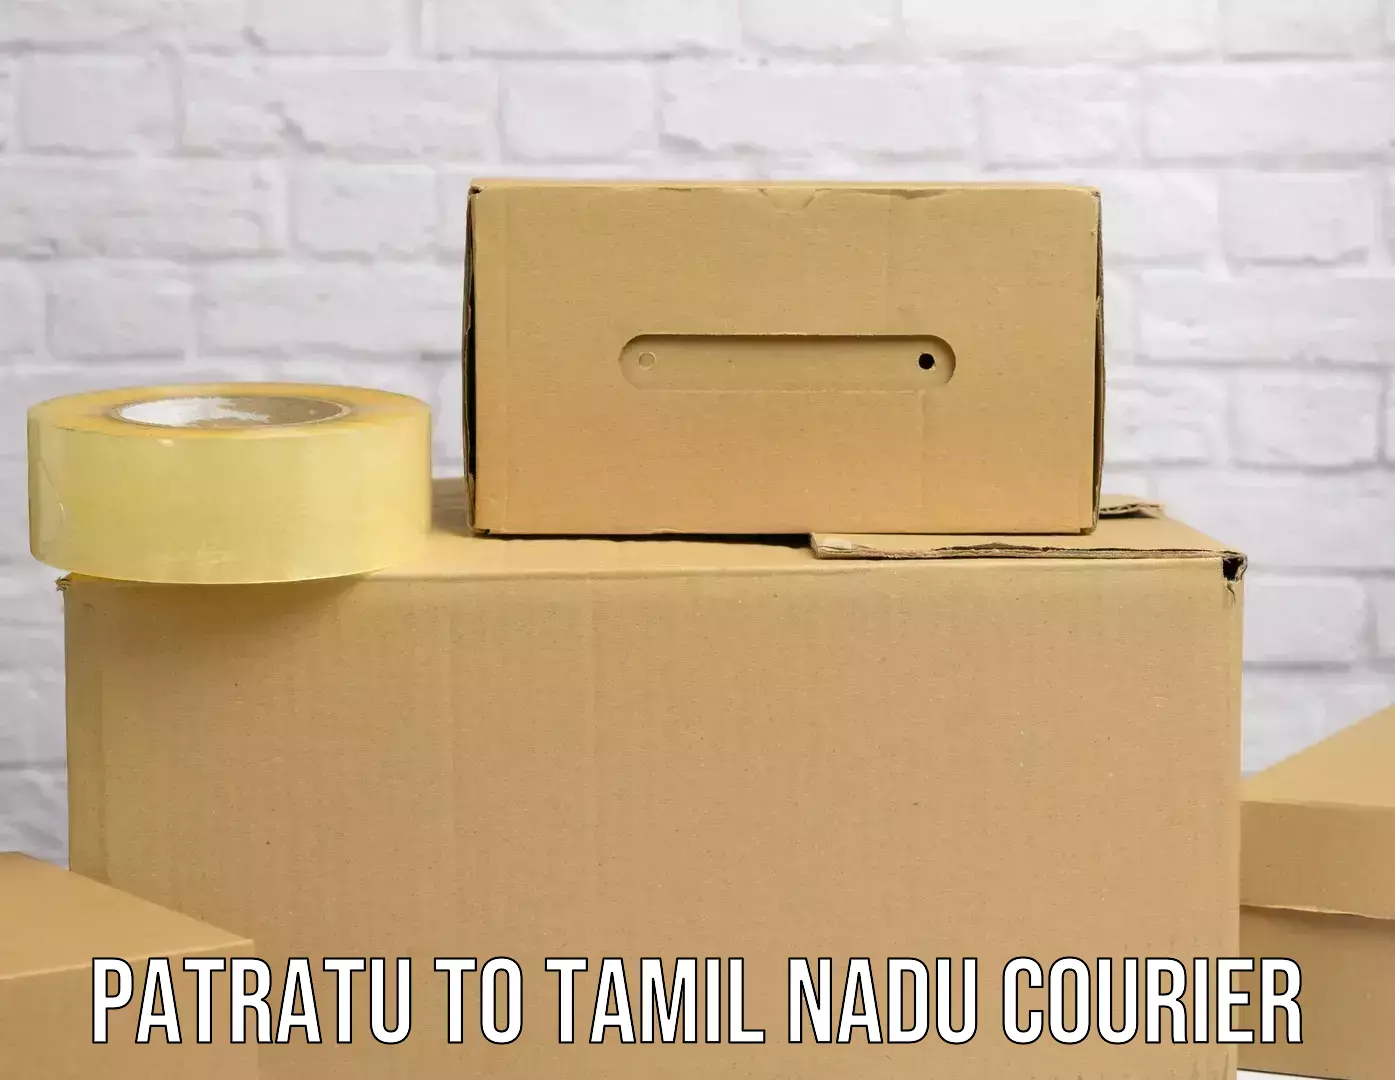 Express logistics service Patratu to Tamil Nadu